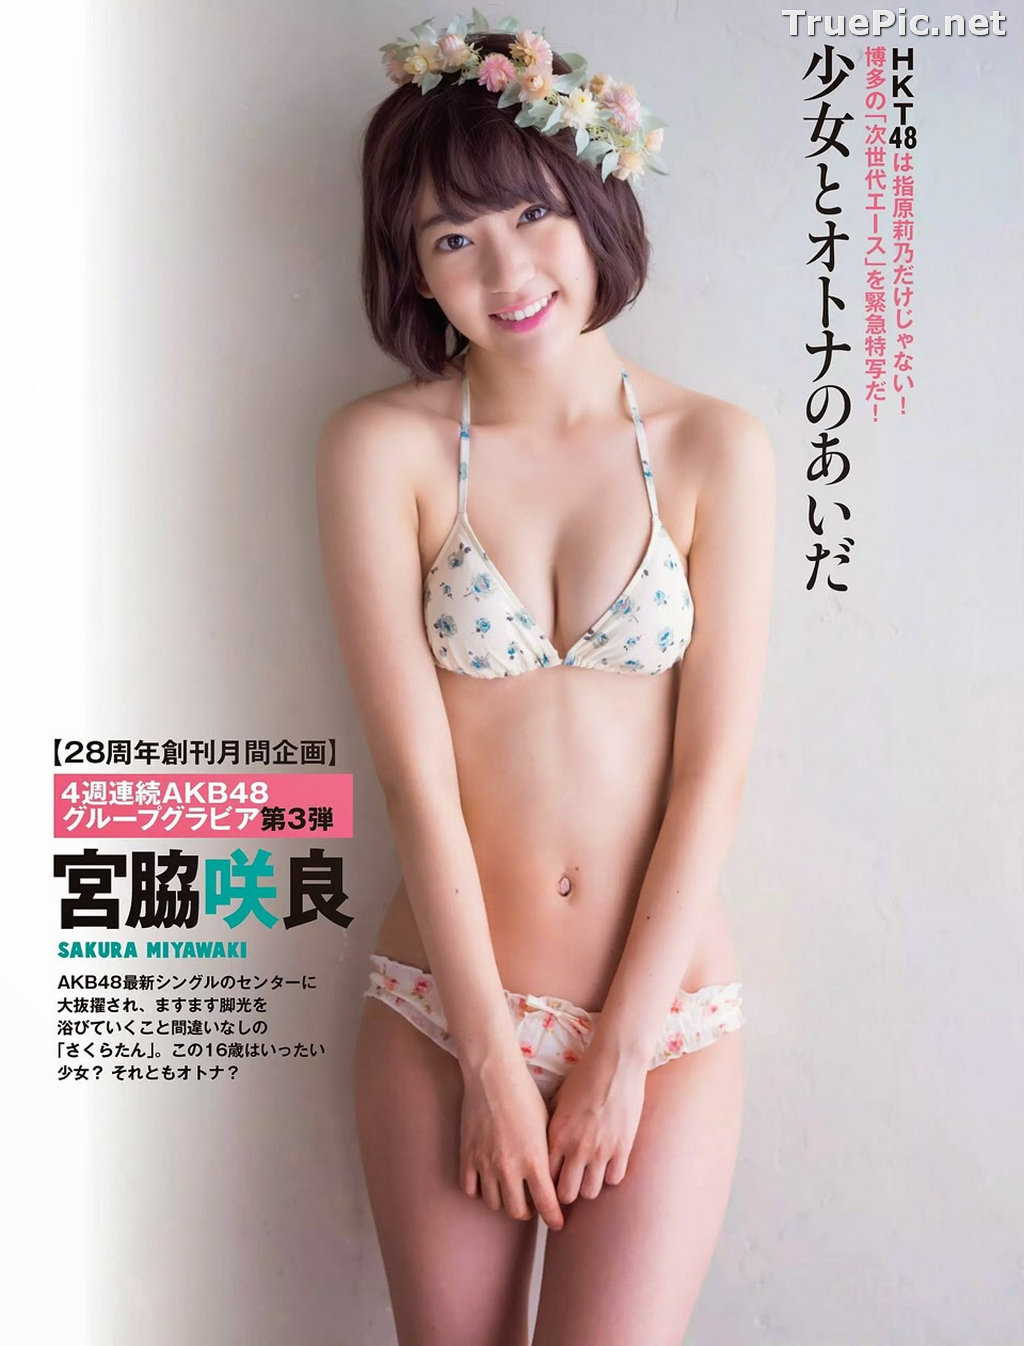 Image Japanese Singer and Actress - Sakura Miyawaki (宮脇咲良) - Sexy Picture Collection 2021 - TruePic.net - Picture-102